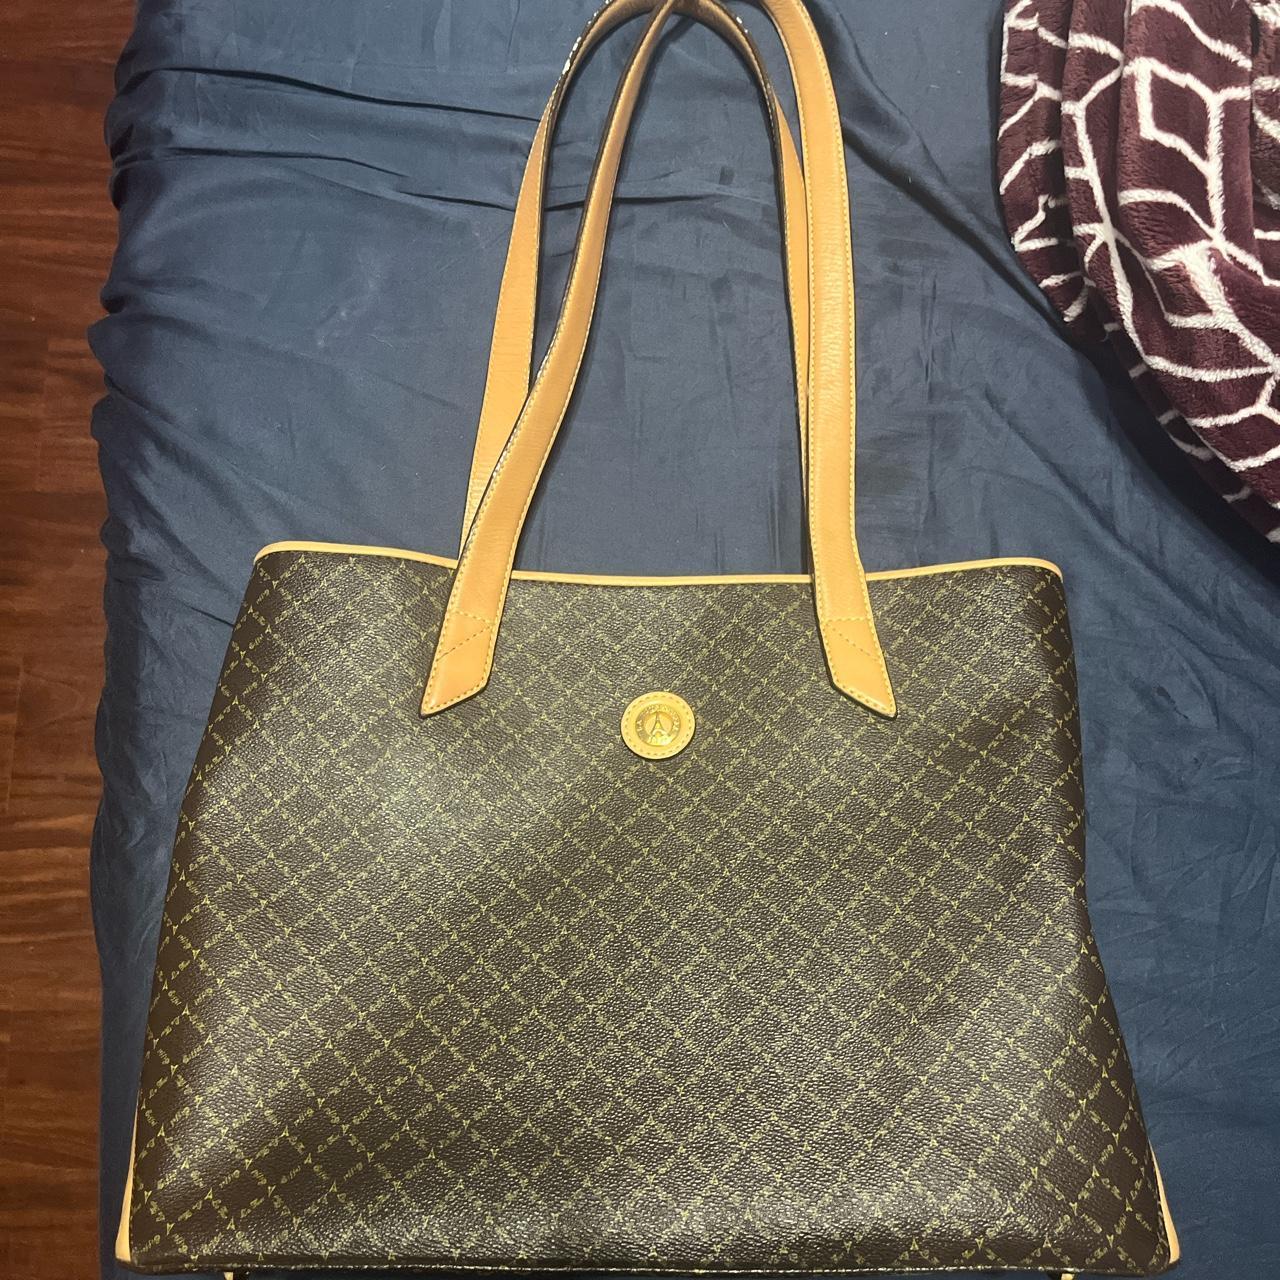 La Tour Eiffel Bags & Handbags for Women for sale | eBay